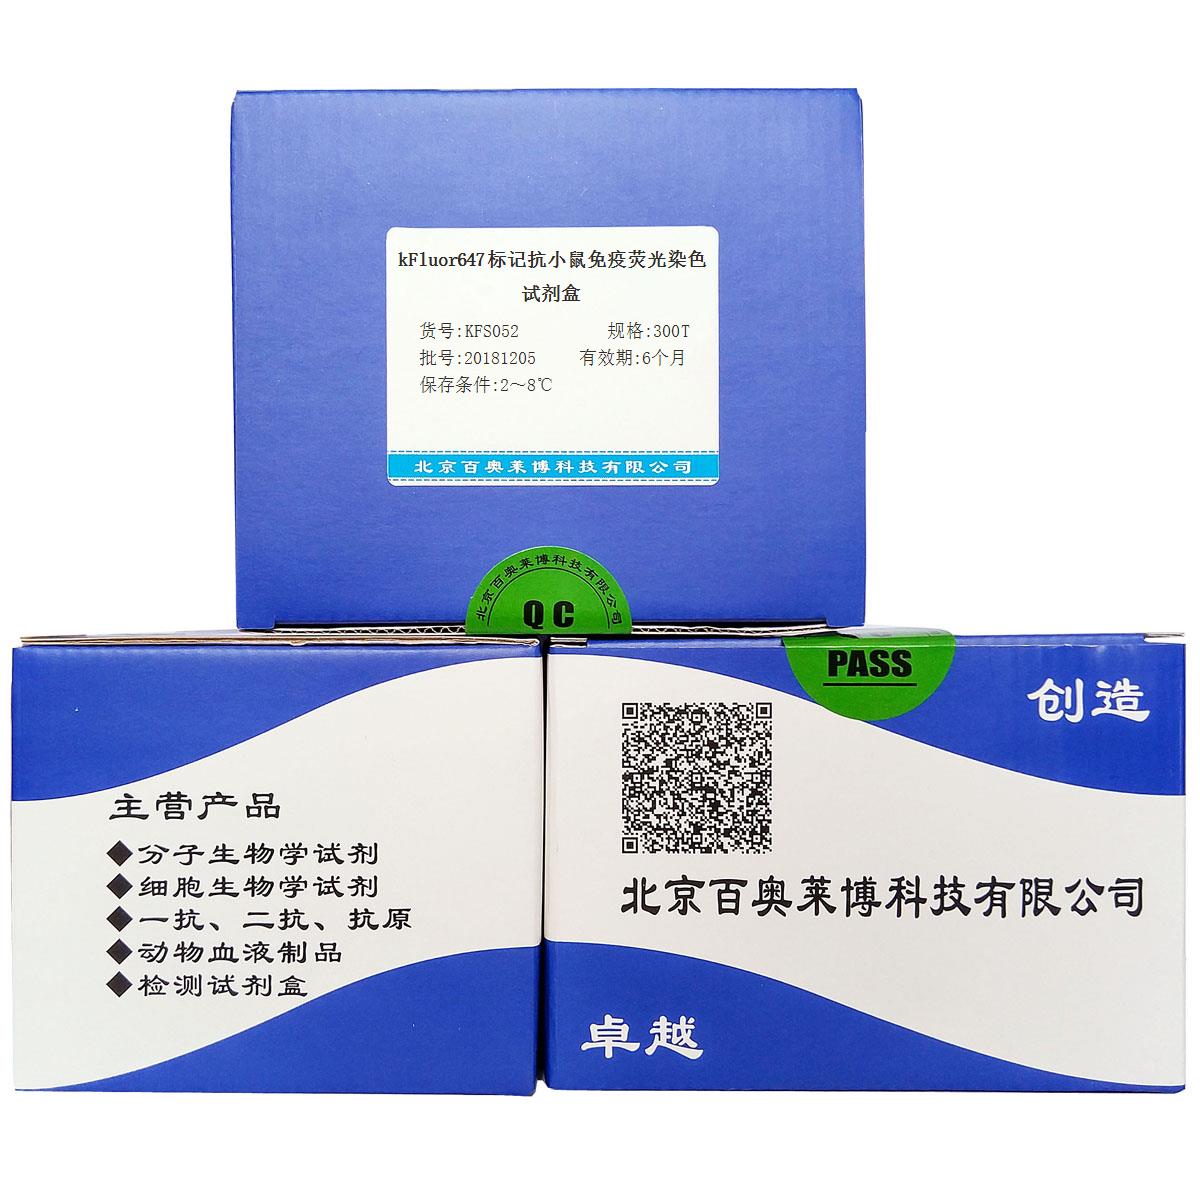 kFluor647标记抗小鼠免疫荧光染色试剂盒